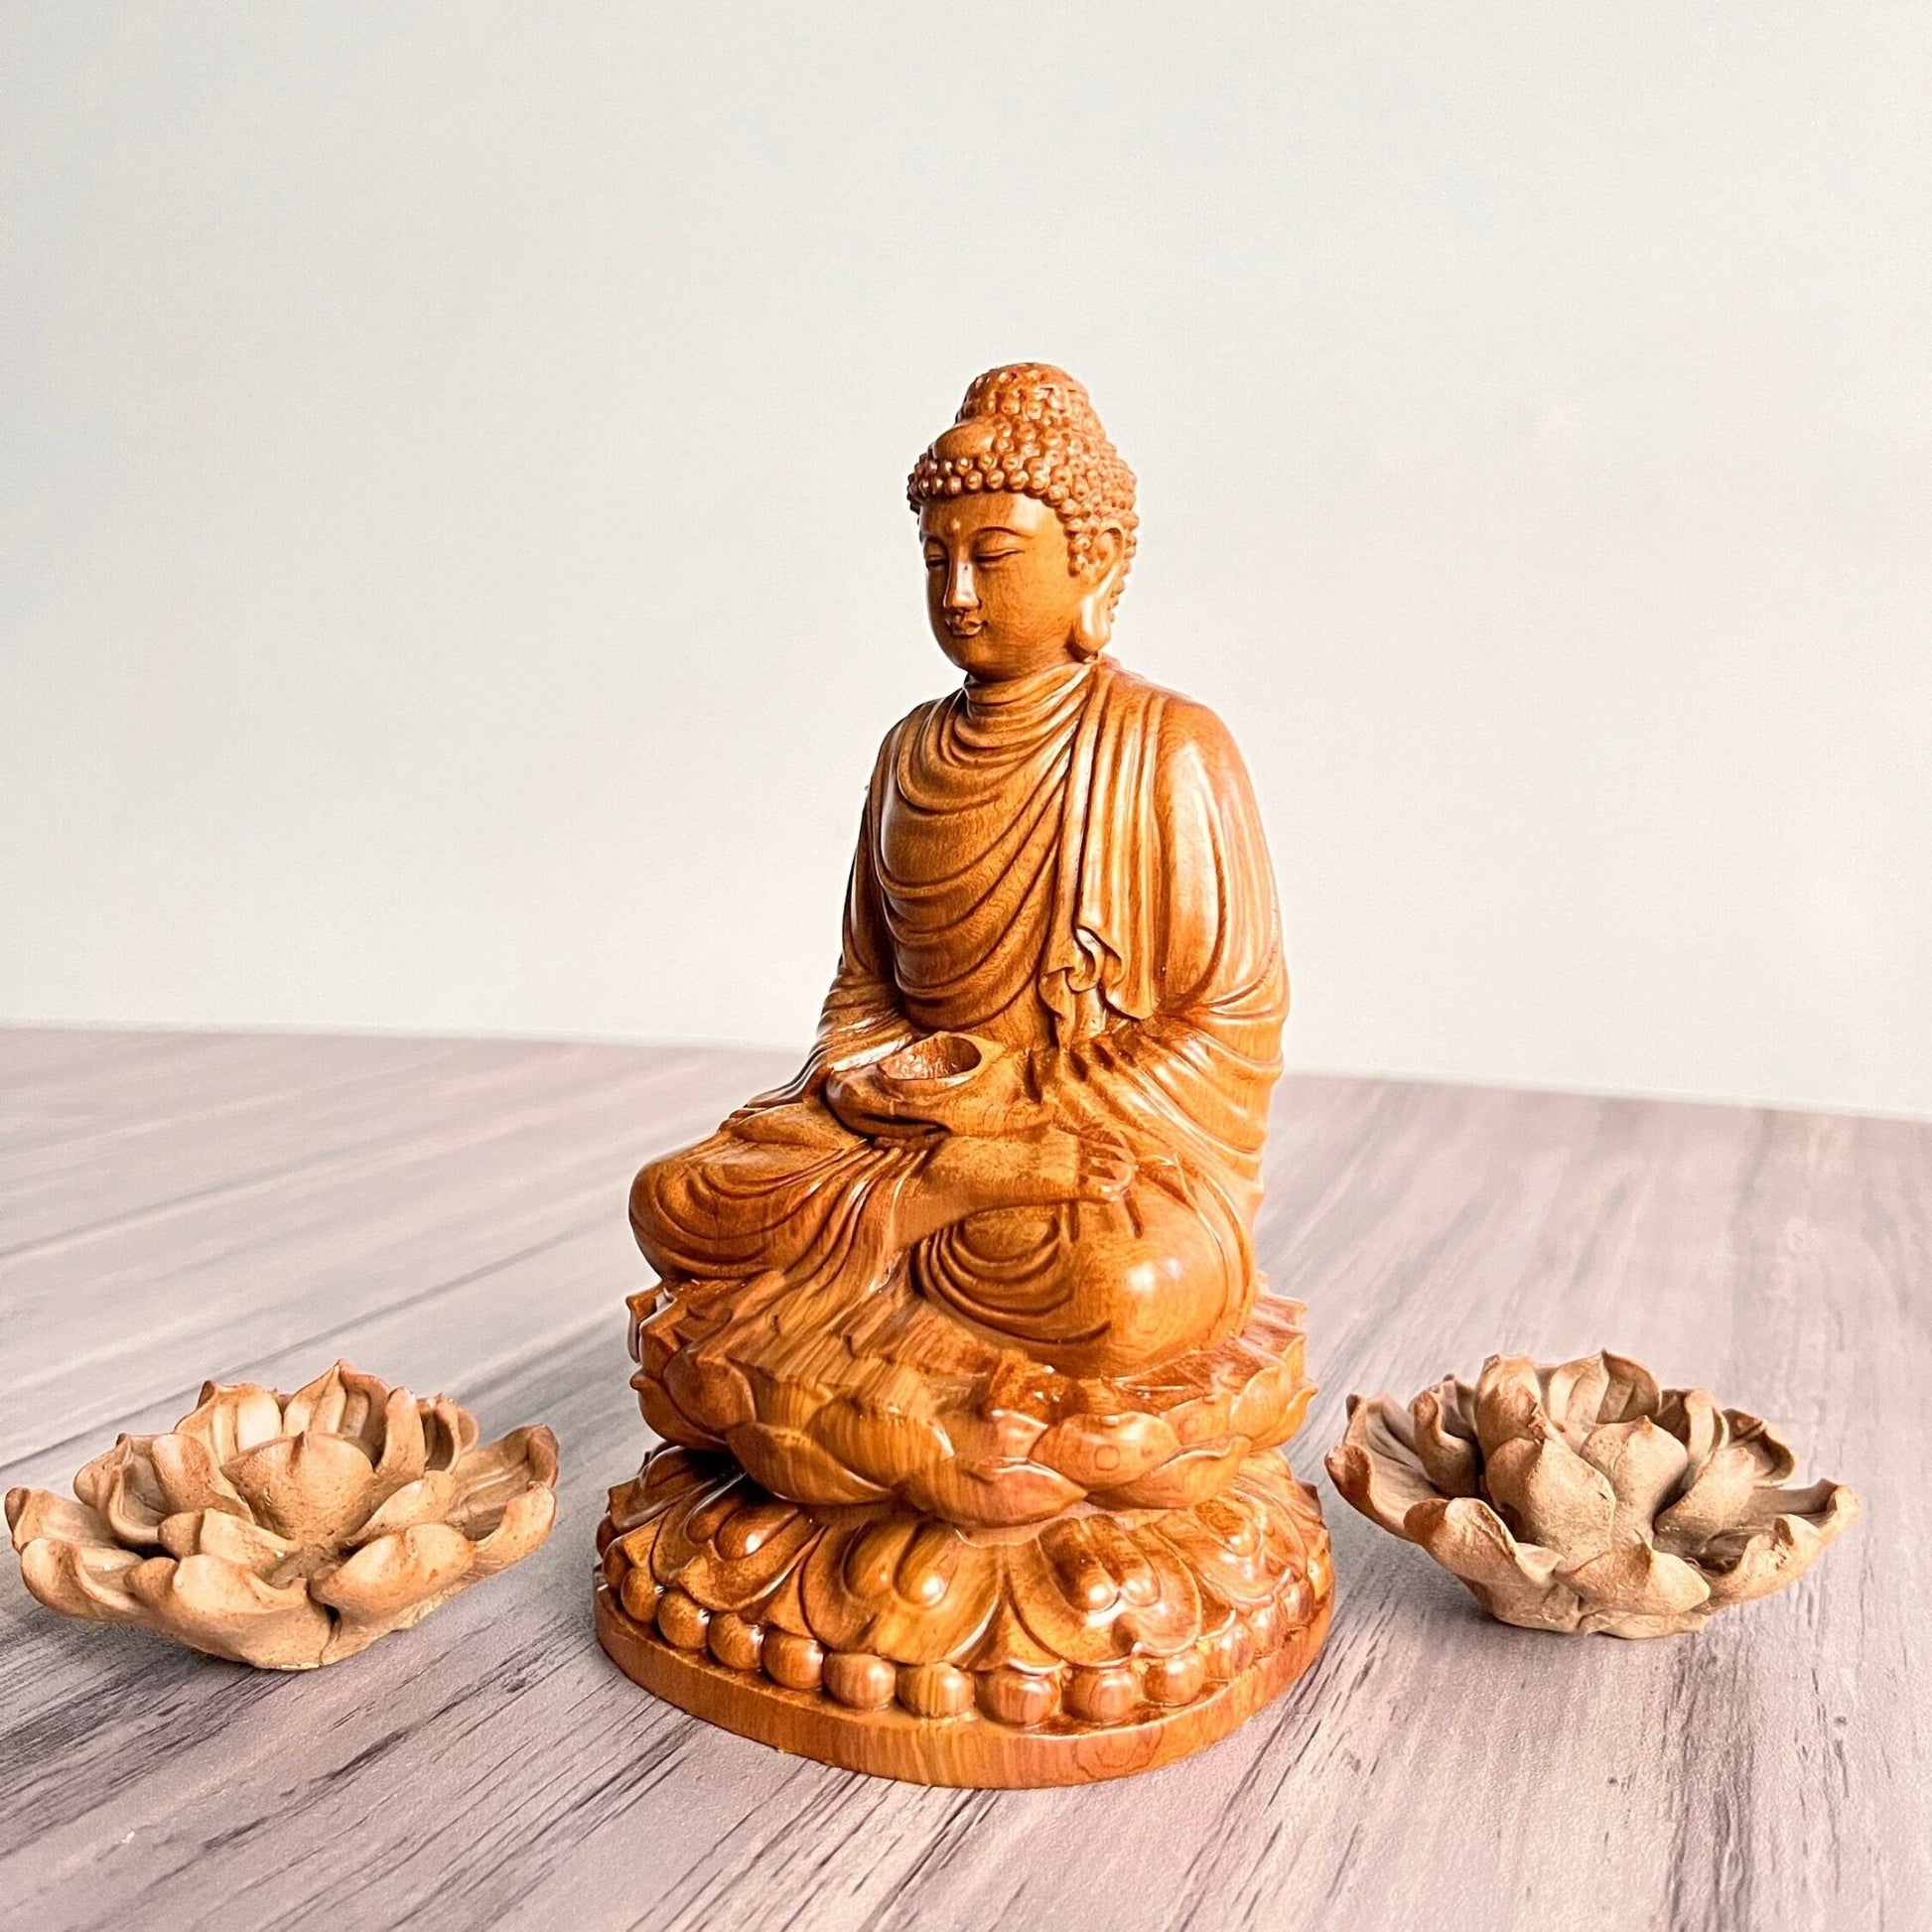 Gautama Buddha Sitting on Lotus Wood Carving StatuePremiumWoodArt